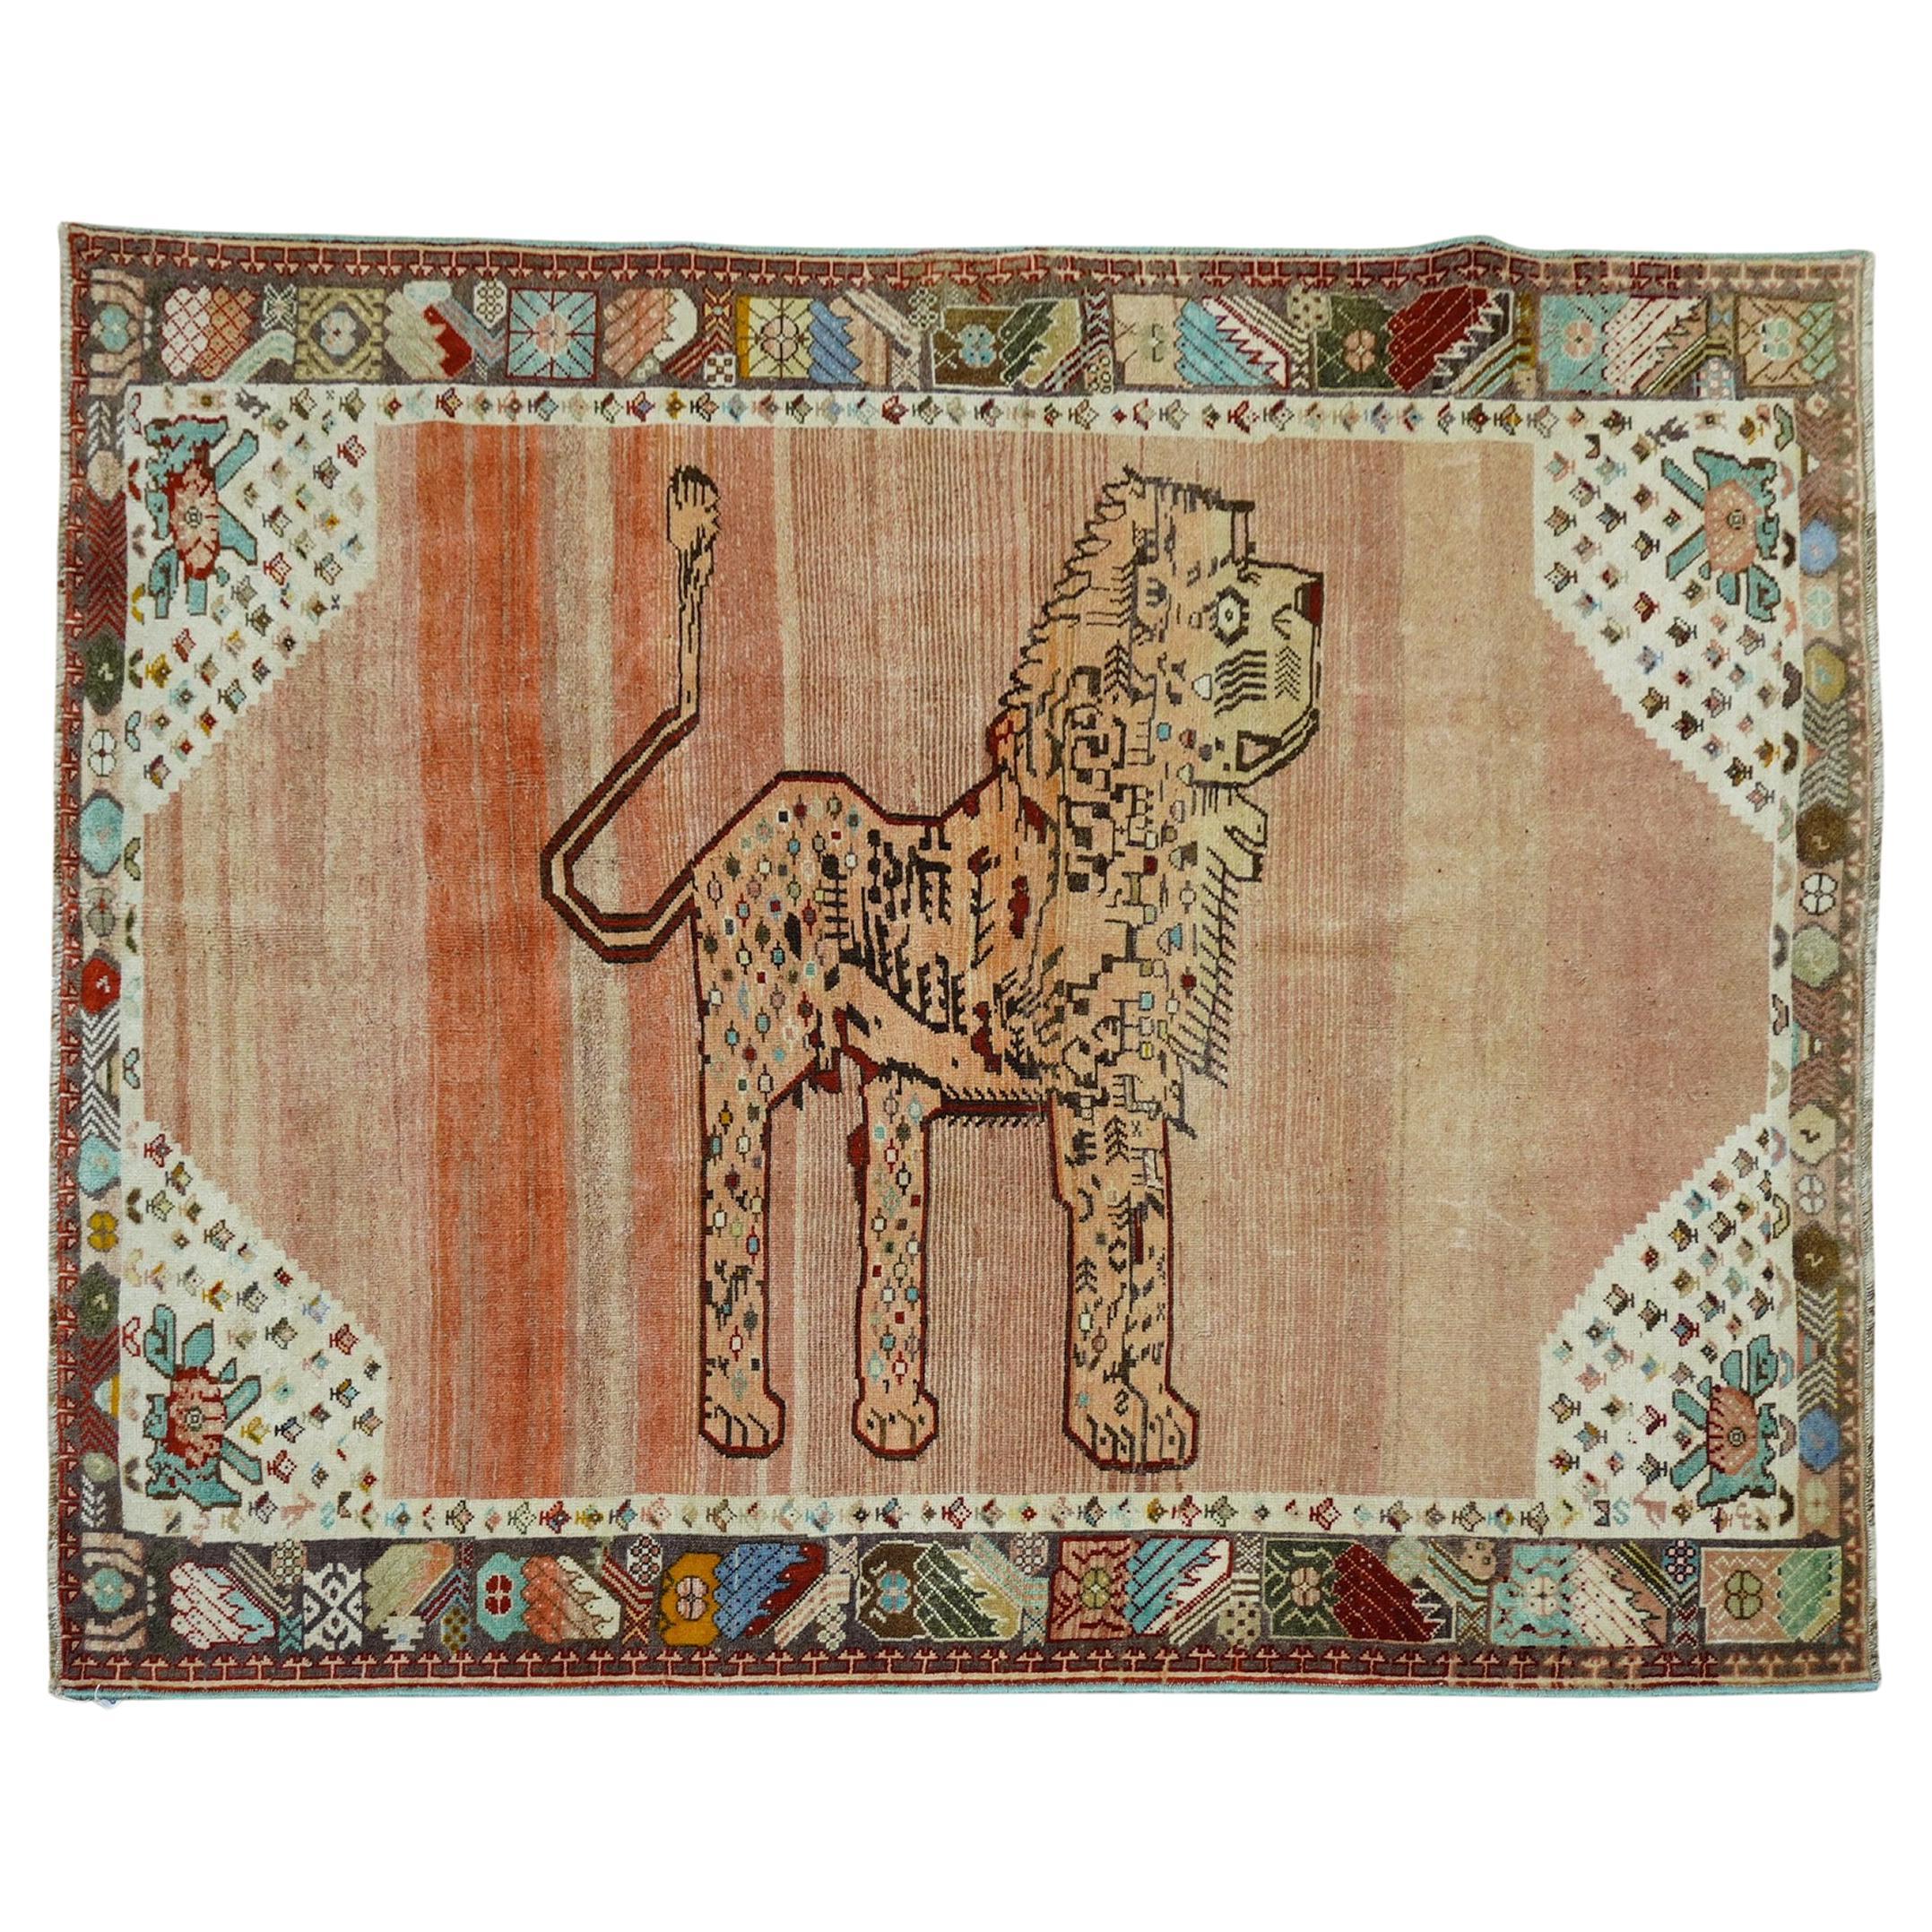 Tapis persan Shiraz en forme de lion excentrique en vente